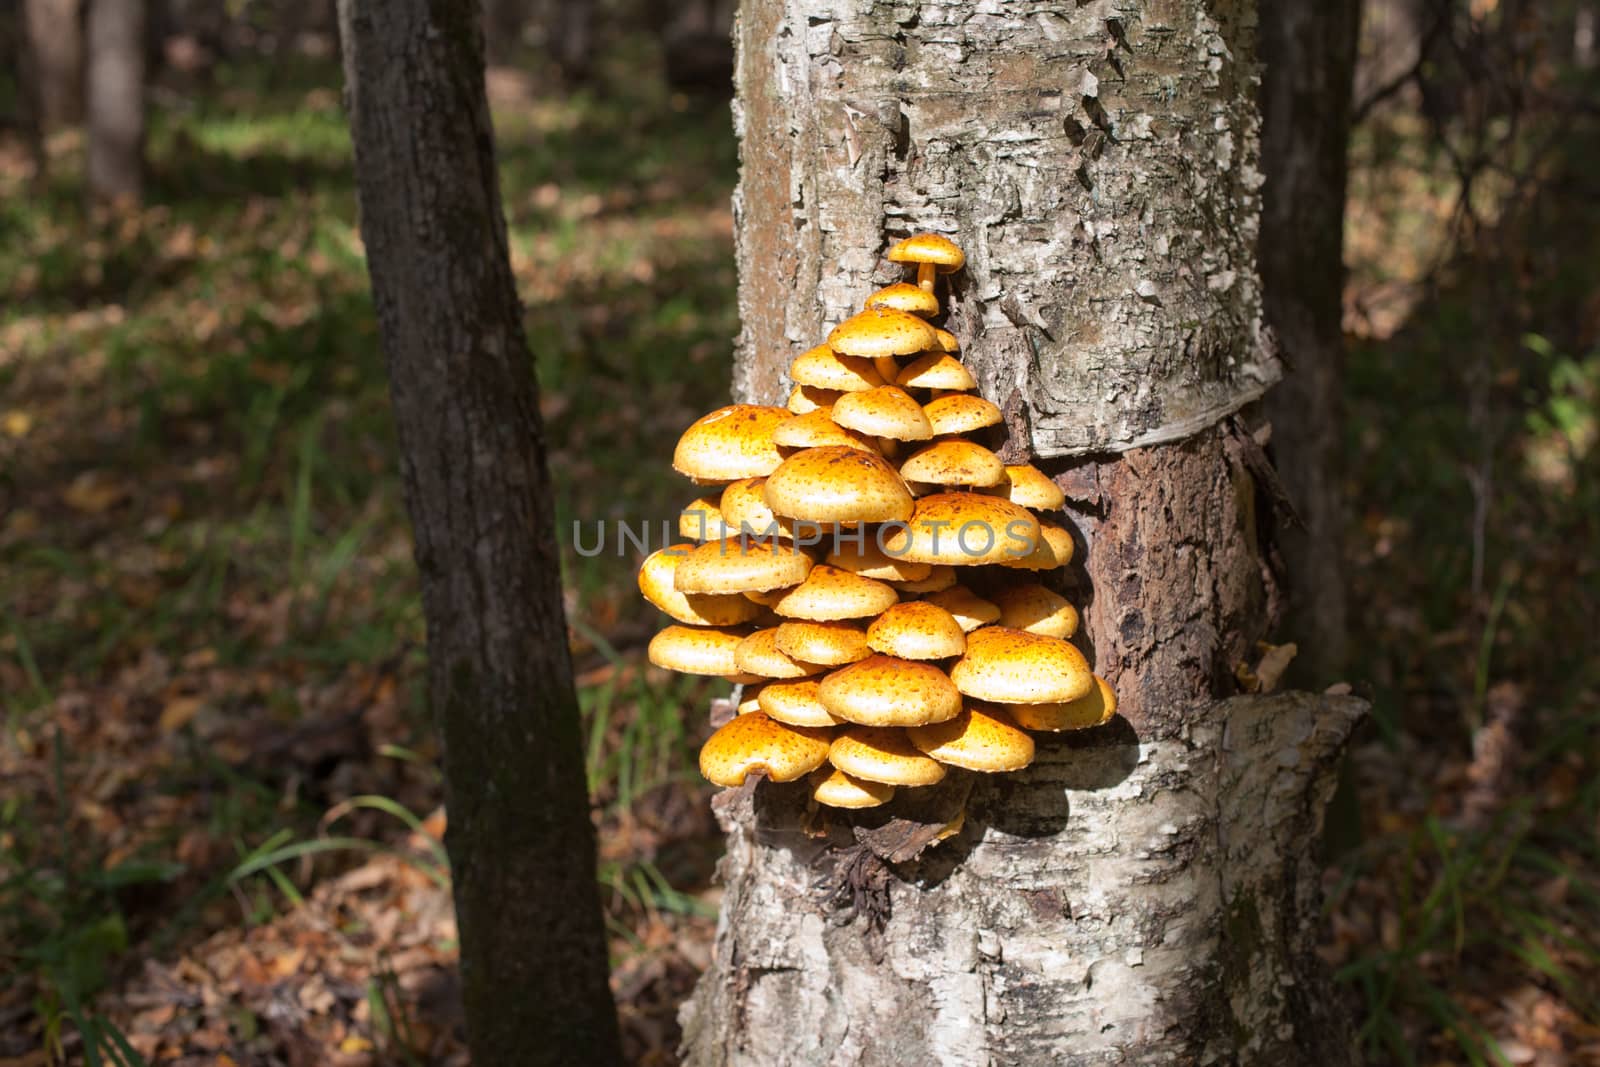 Yellow mushrooms by foaloce